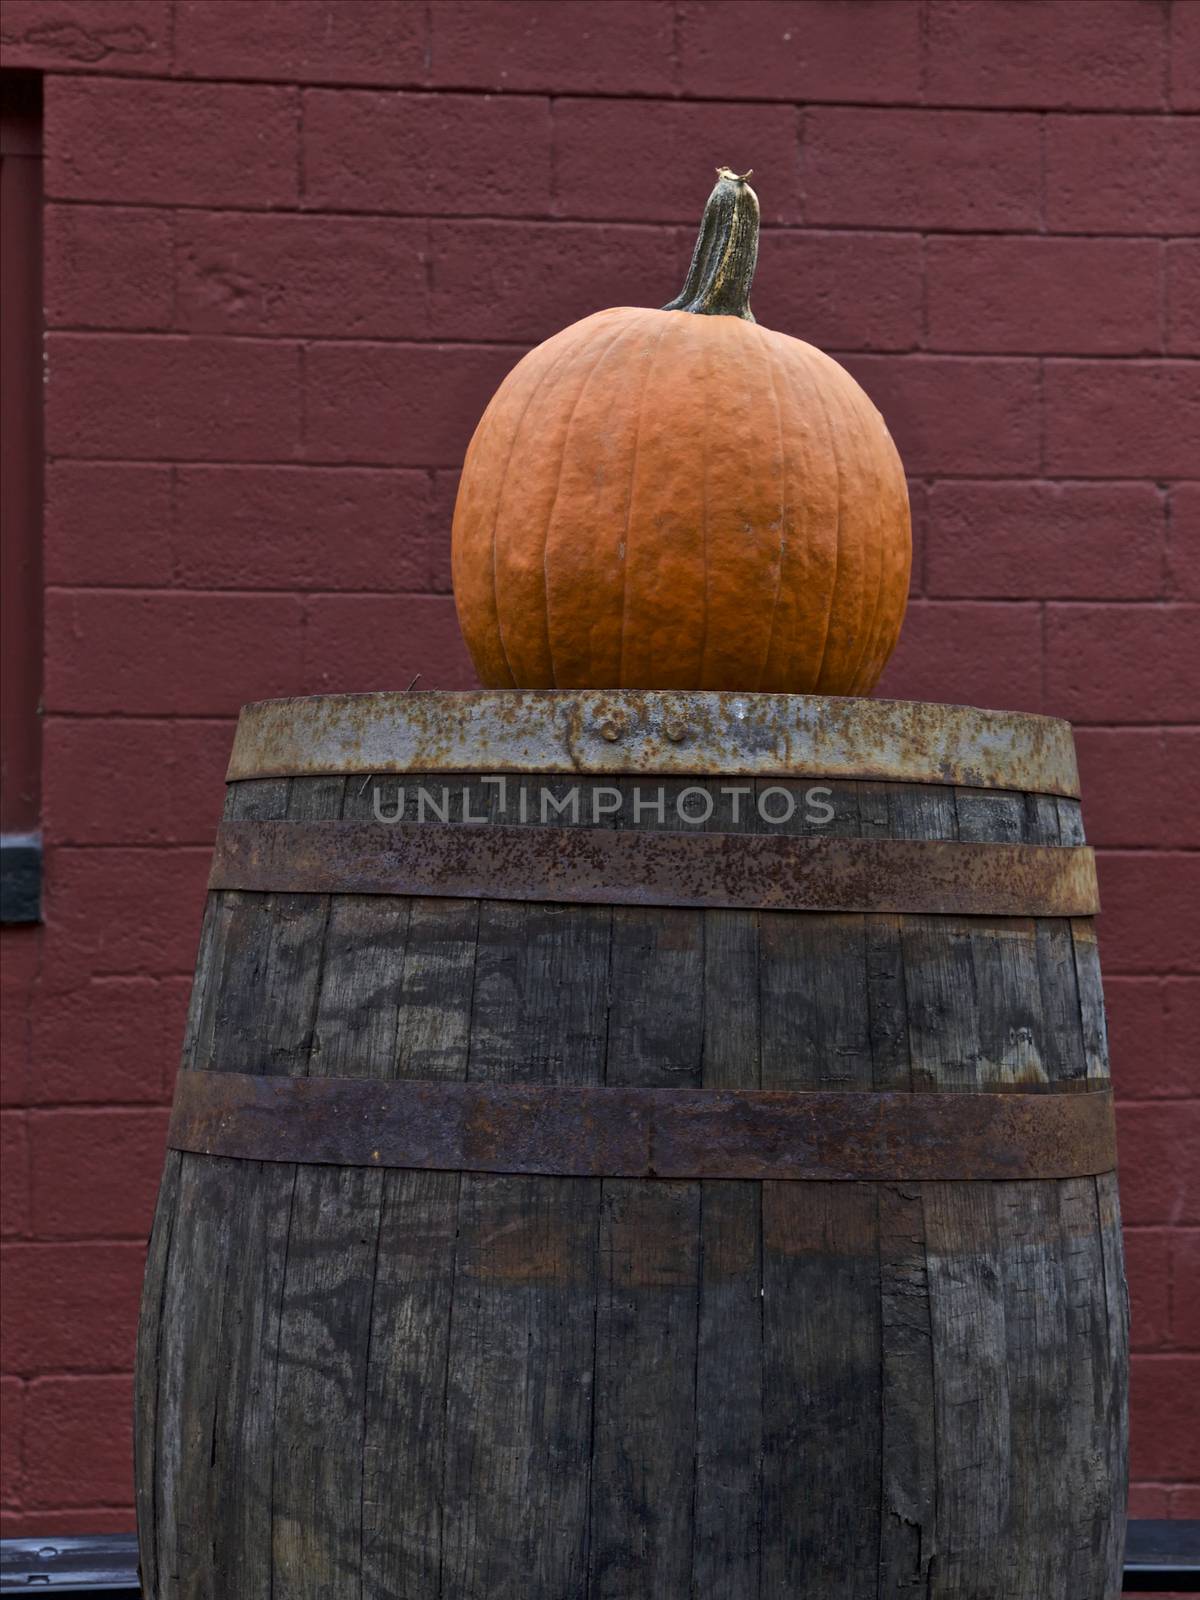 Pumpkin on a wine barrel, Connecticut, USA